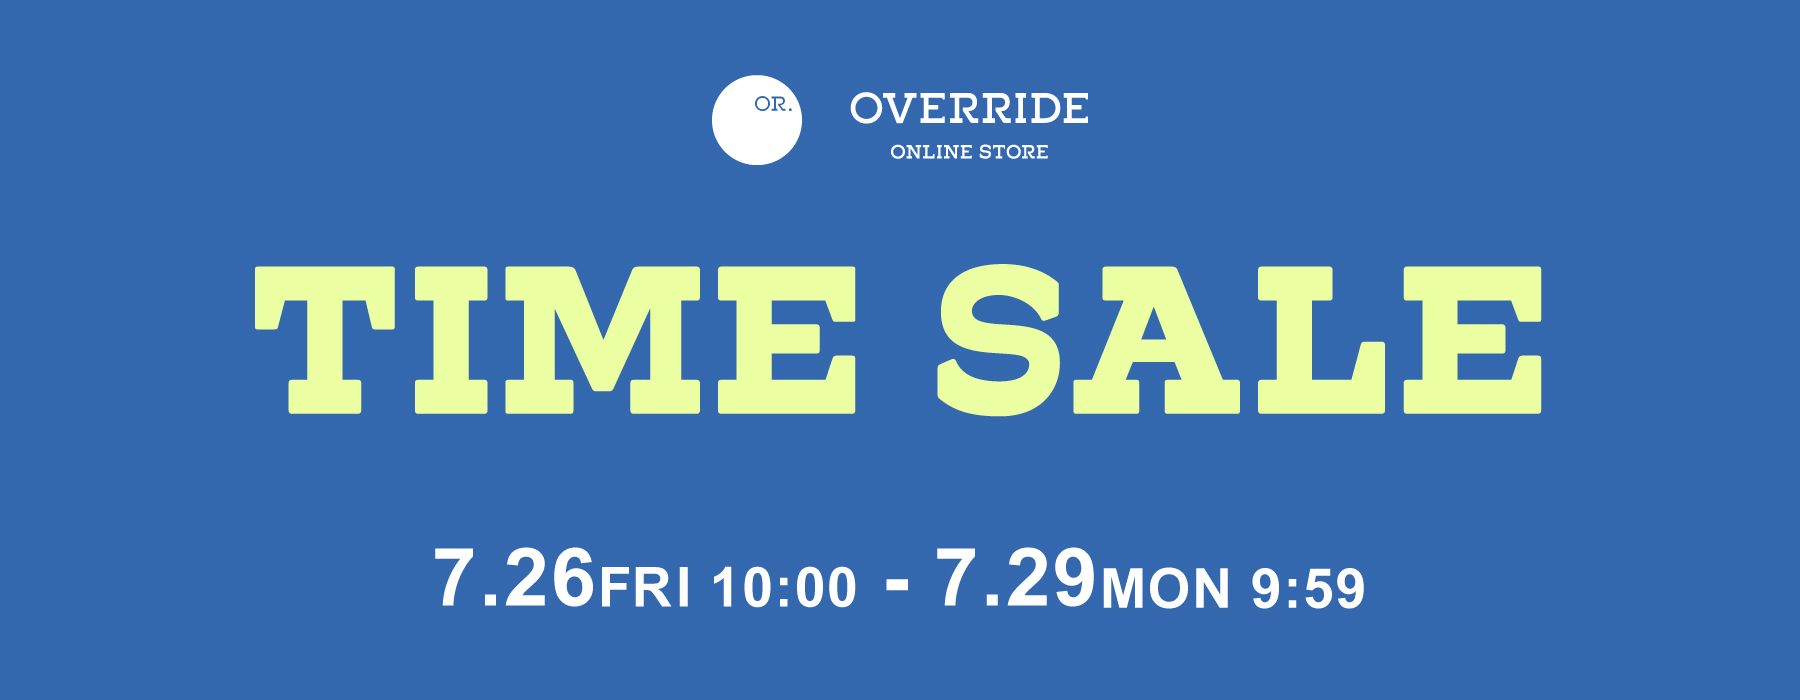 TIME SALE | override